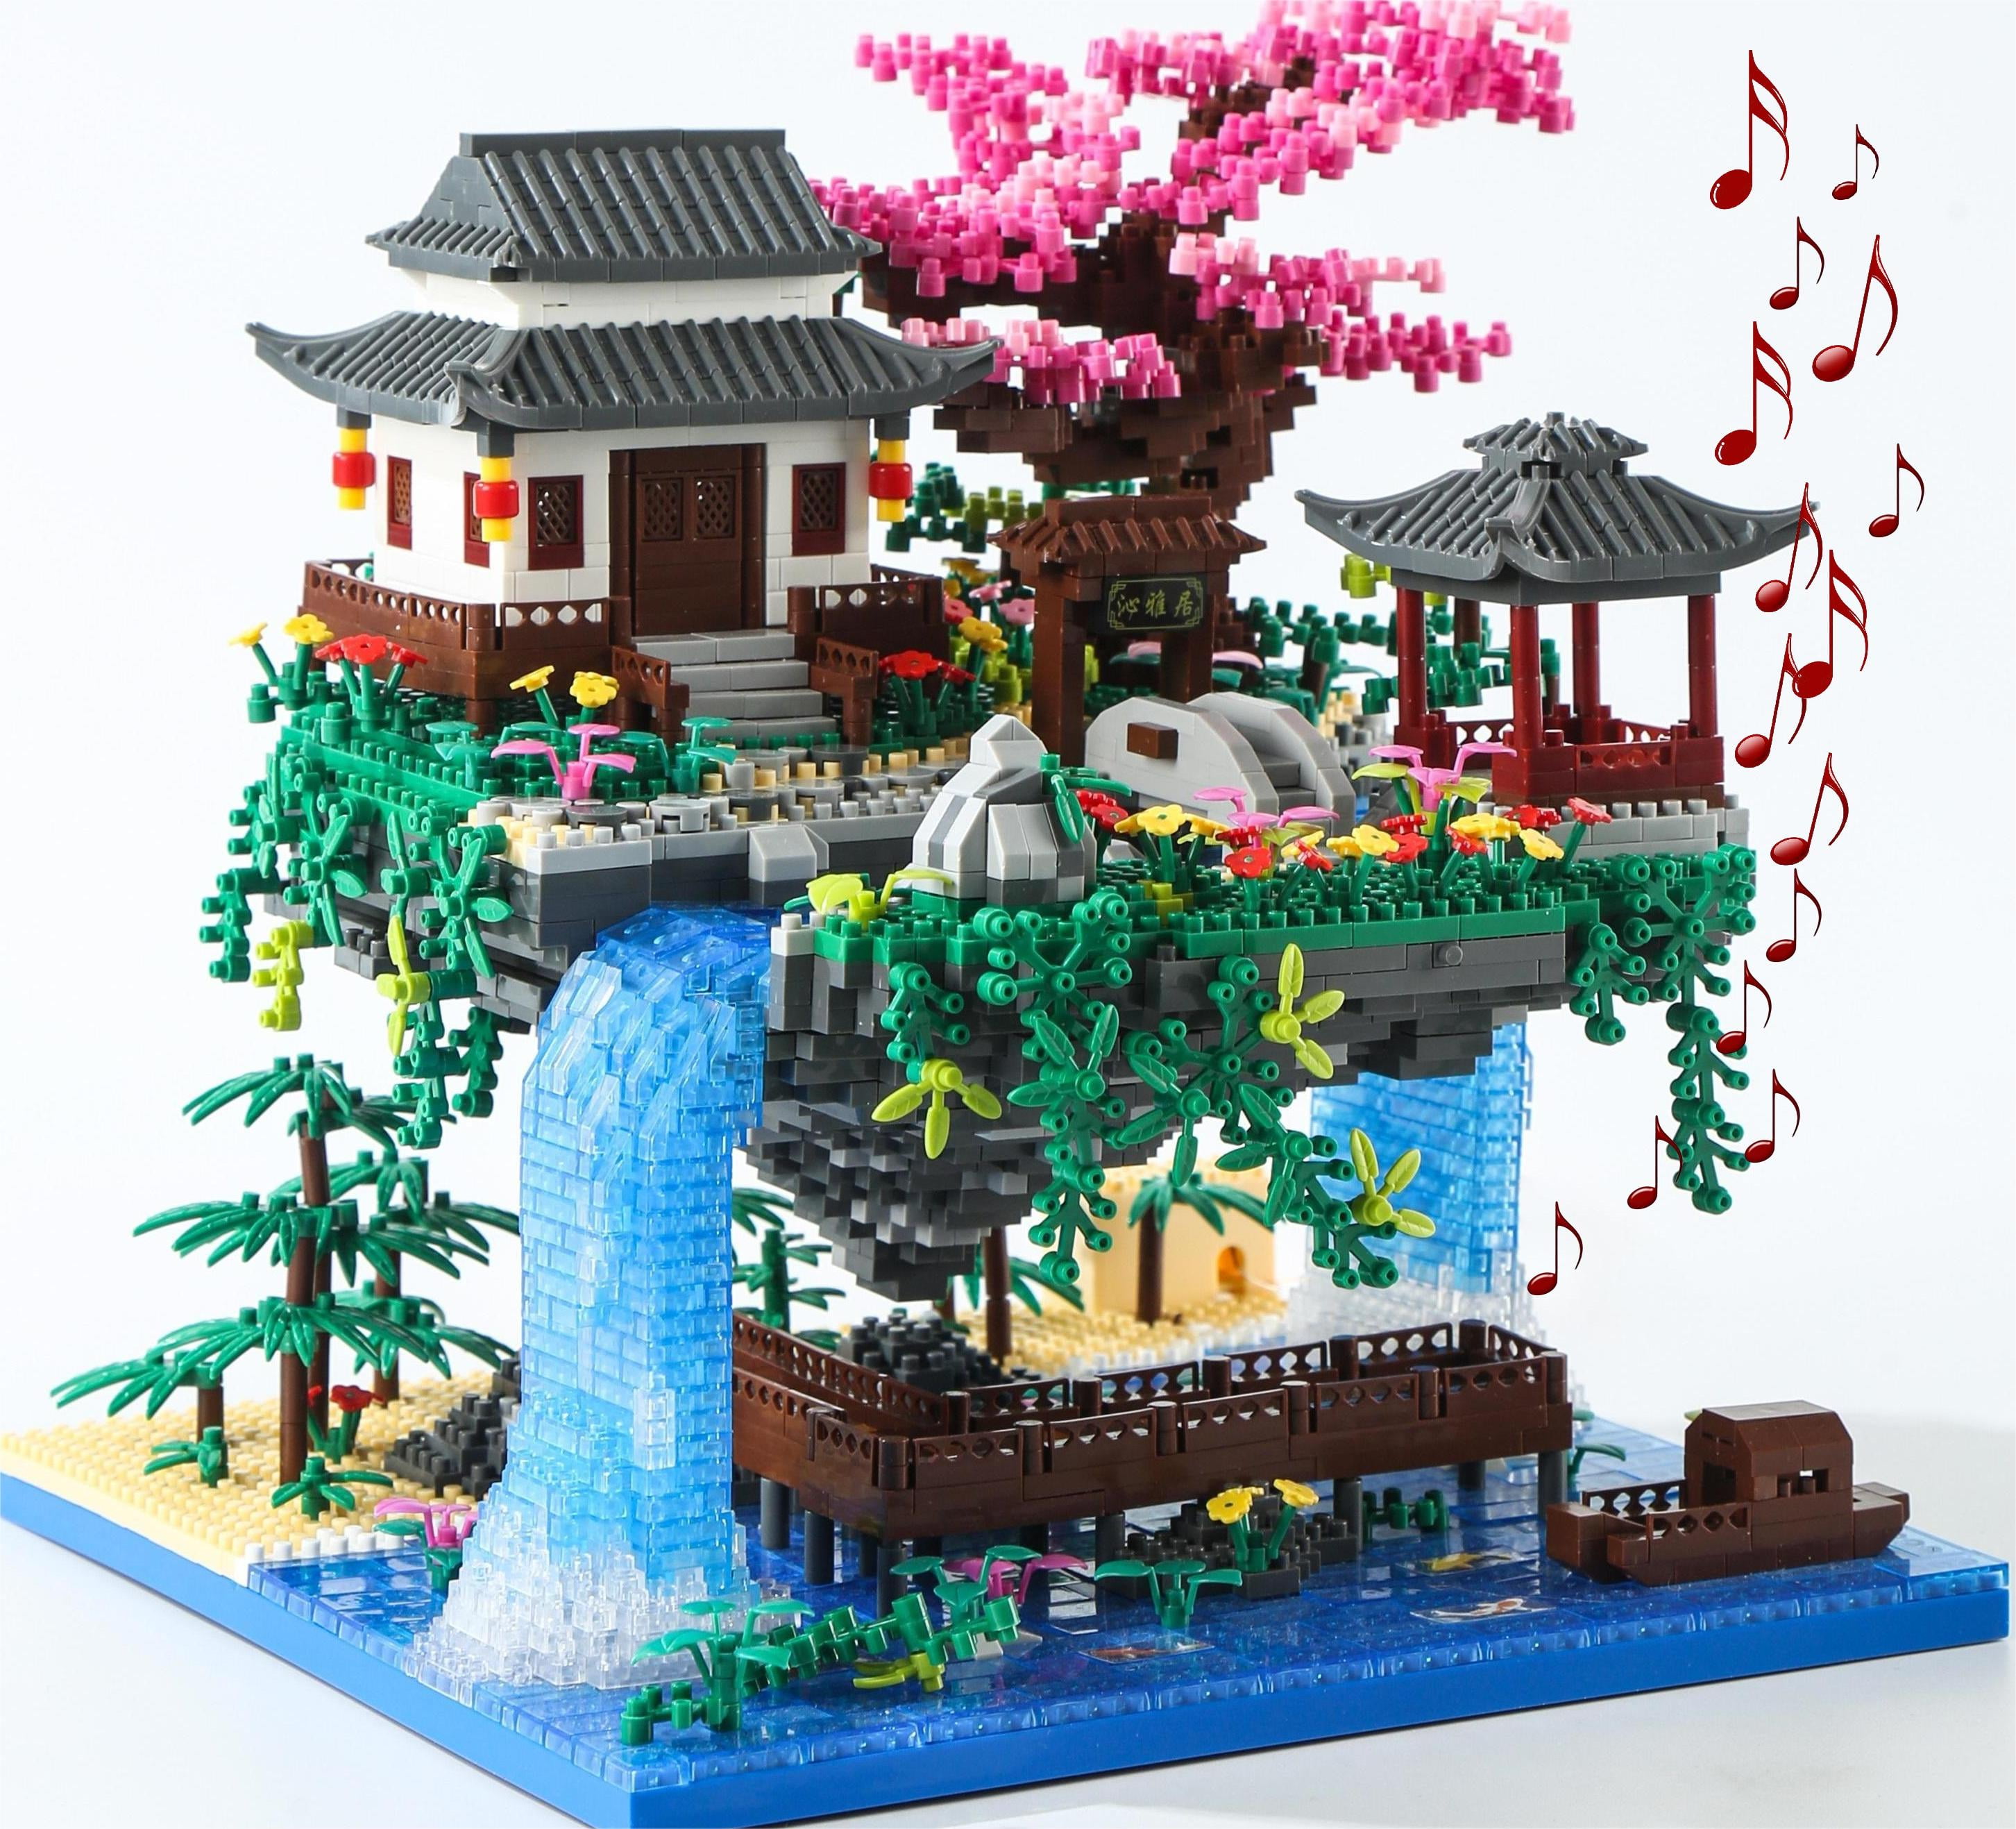 Yushinv Cherry Blossom Tree Building Set 3220 Pcs, Original  Music(Symphony),Pink Bonsai Building Set 